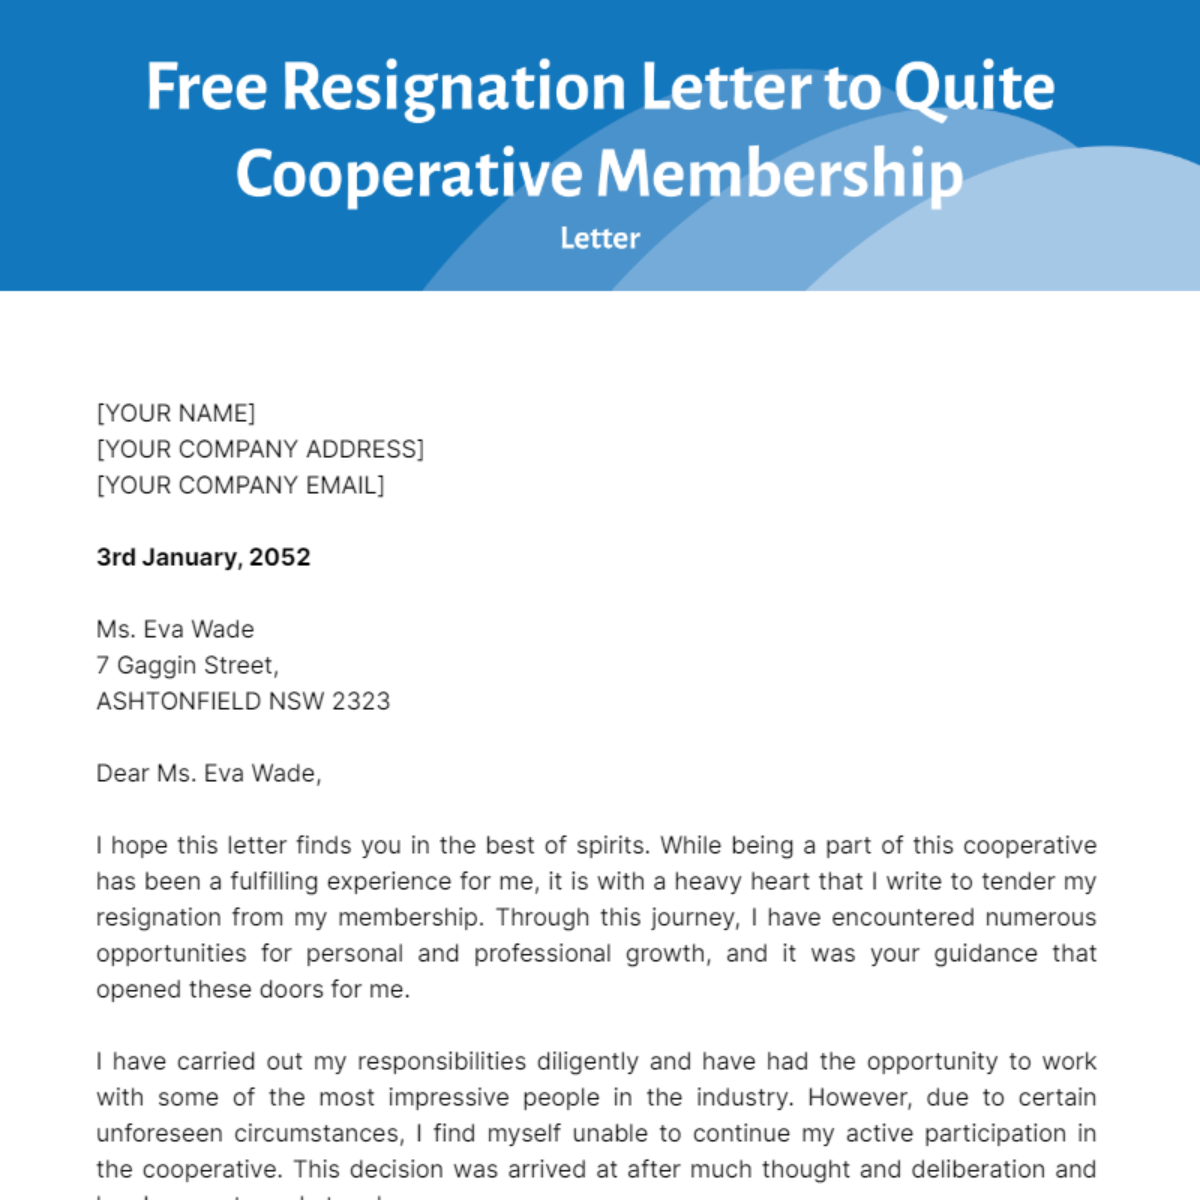 Resignation Letter to Quite Cooperative Membership Template